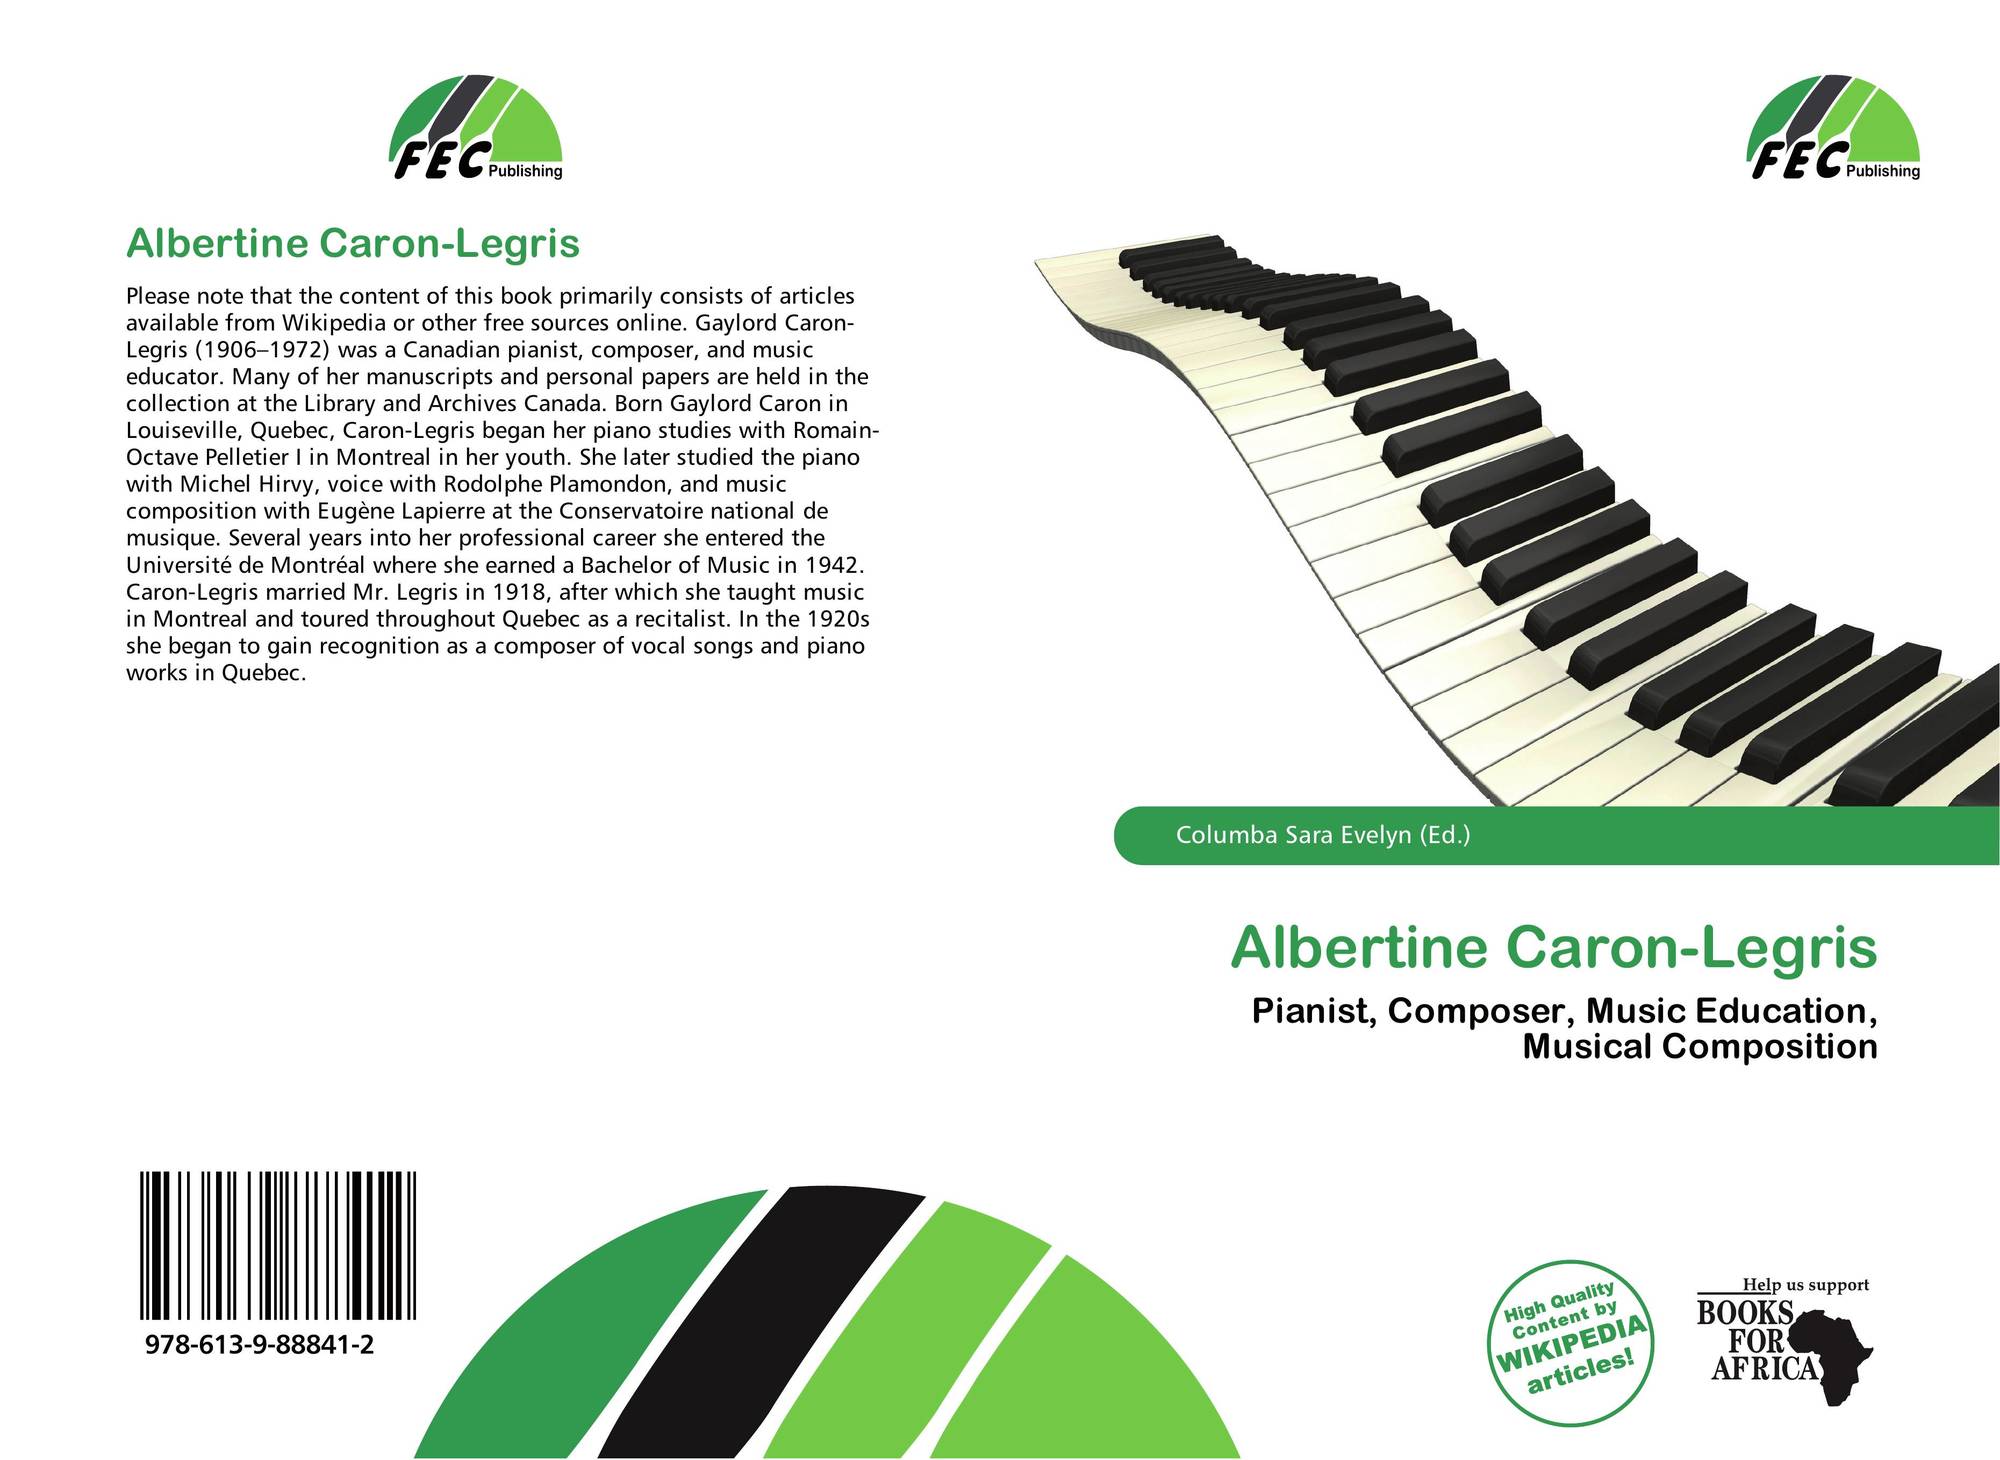 Albertine Caron-Legris, 978-613-9-88841 